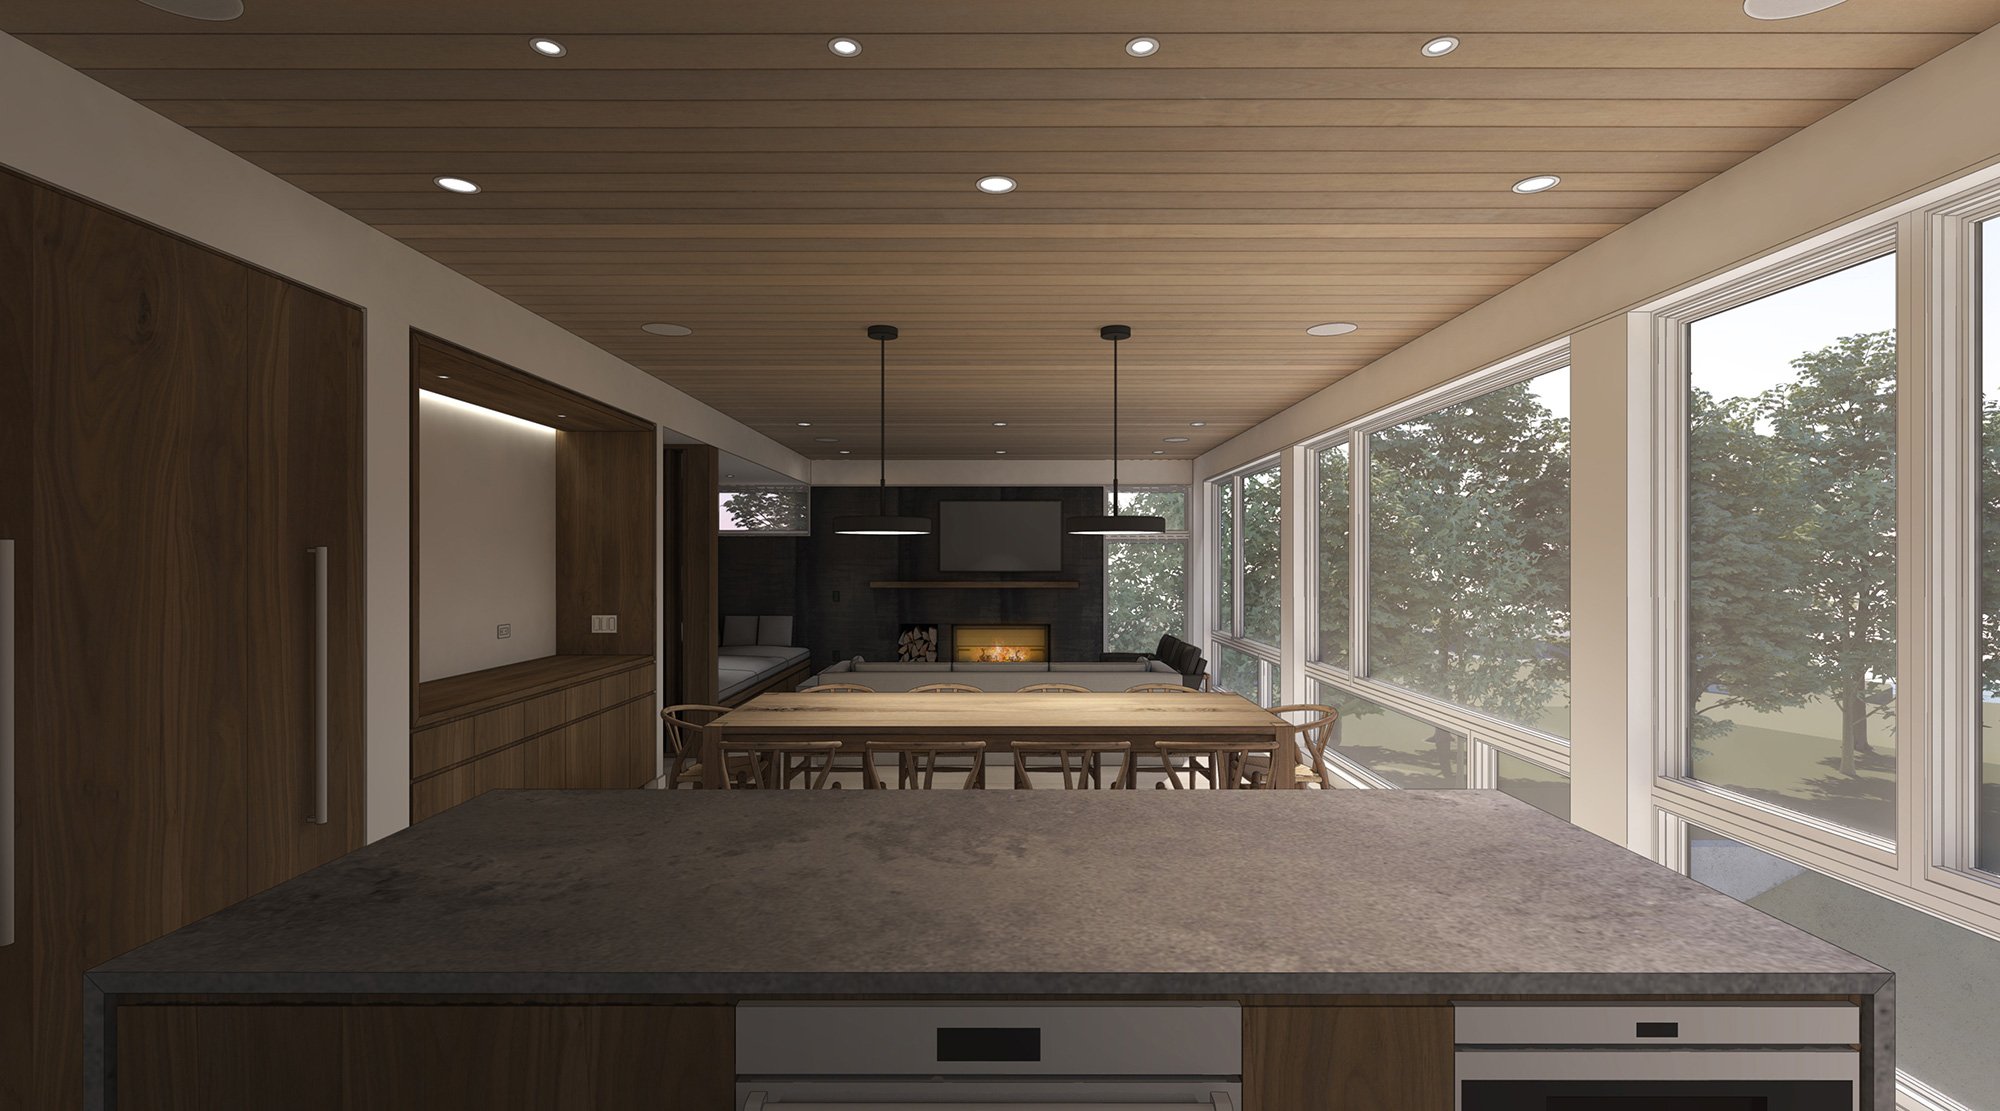 res4-resolution-4-architecture-peck-lake-residence-modern-modular-prefab-home-new-york-adirondacks-custom-high-end-residential-kitchen-dining-living-walnut-millwork-cedar-ceiling.jpg